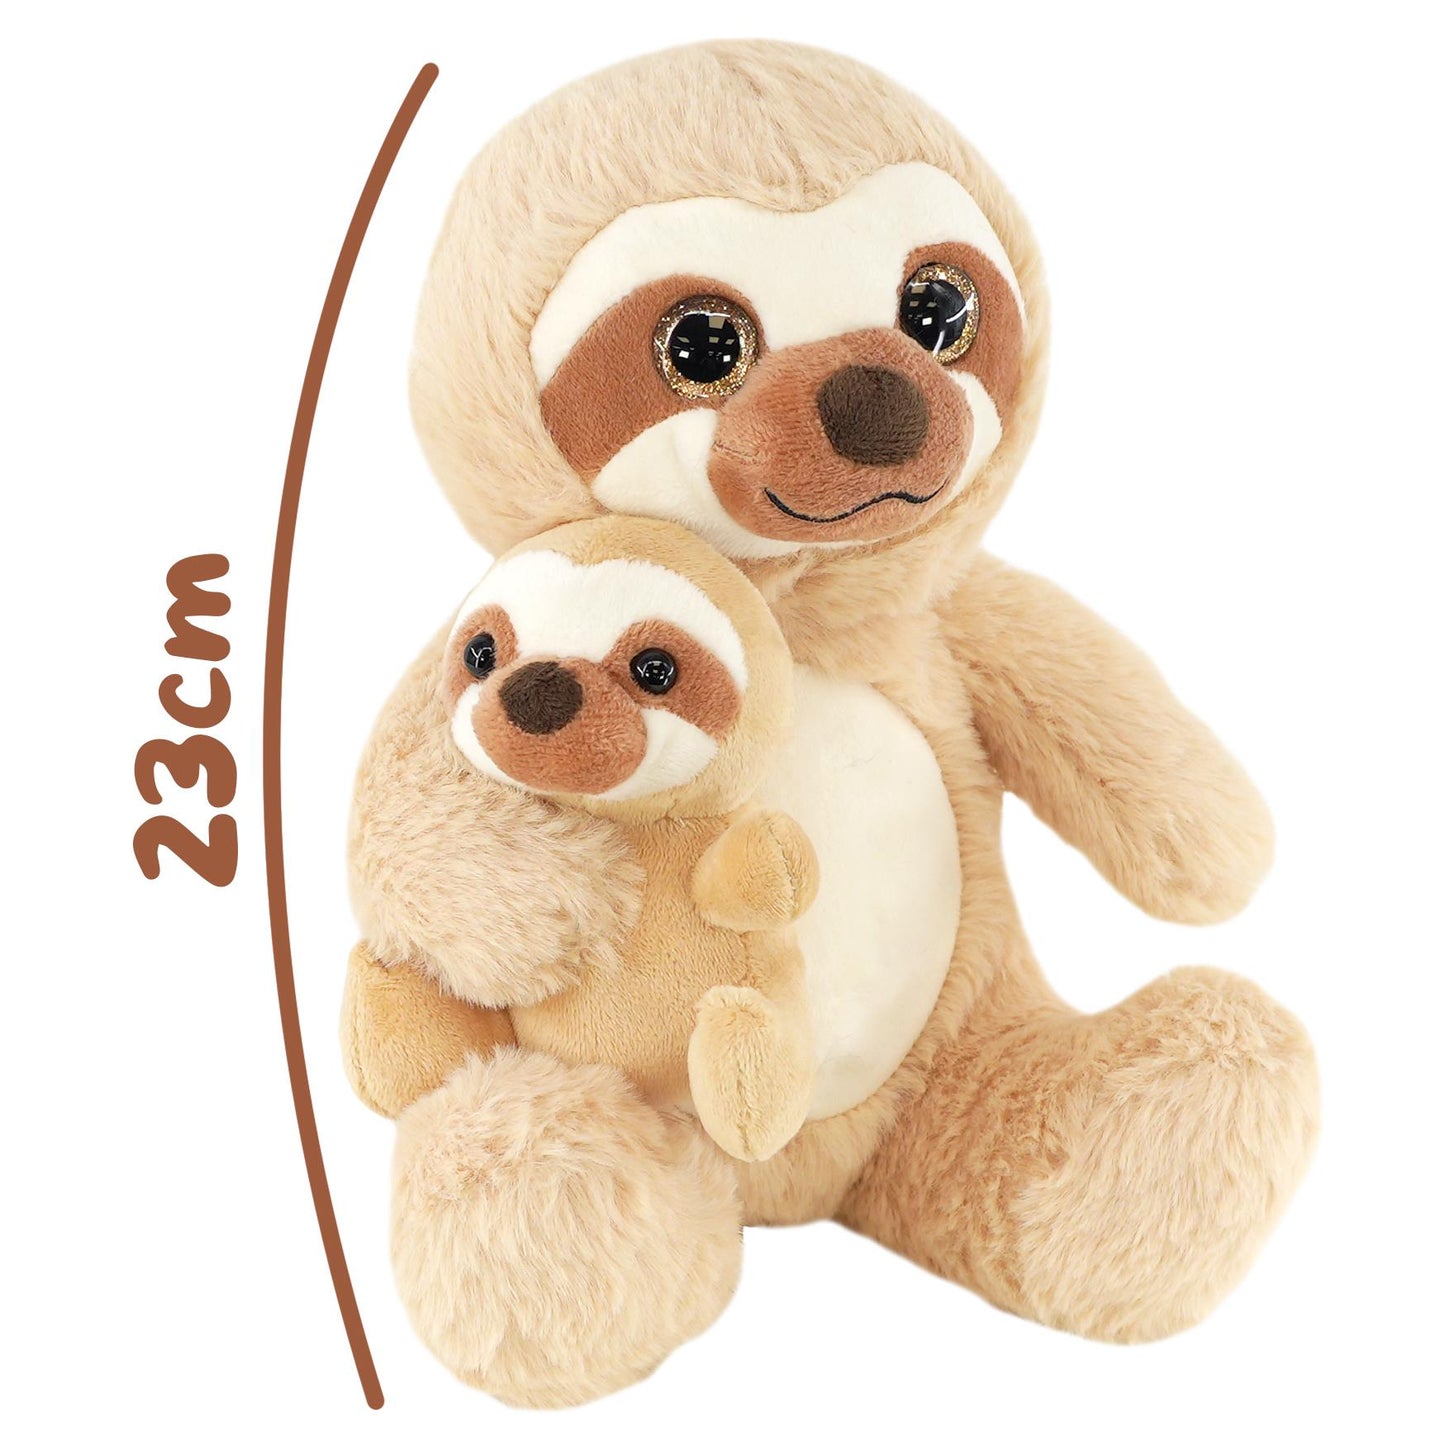 Mum and Baby Sloth Plush Toys by The Magic Toy Shop - UKBuyZone